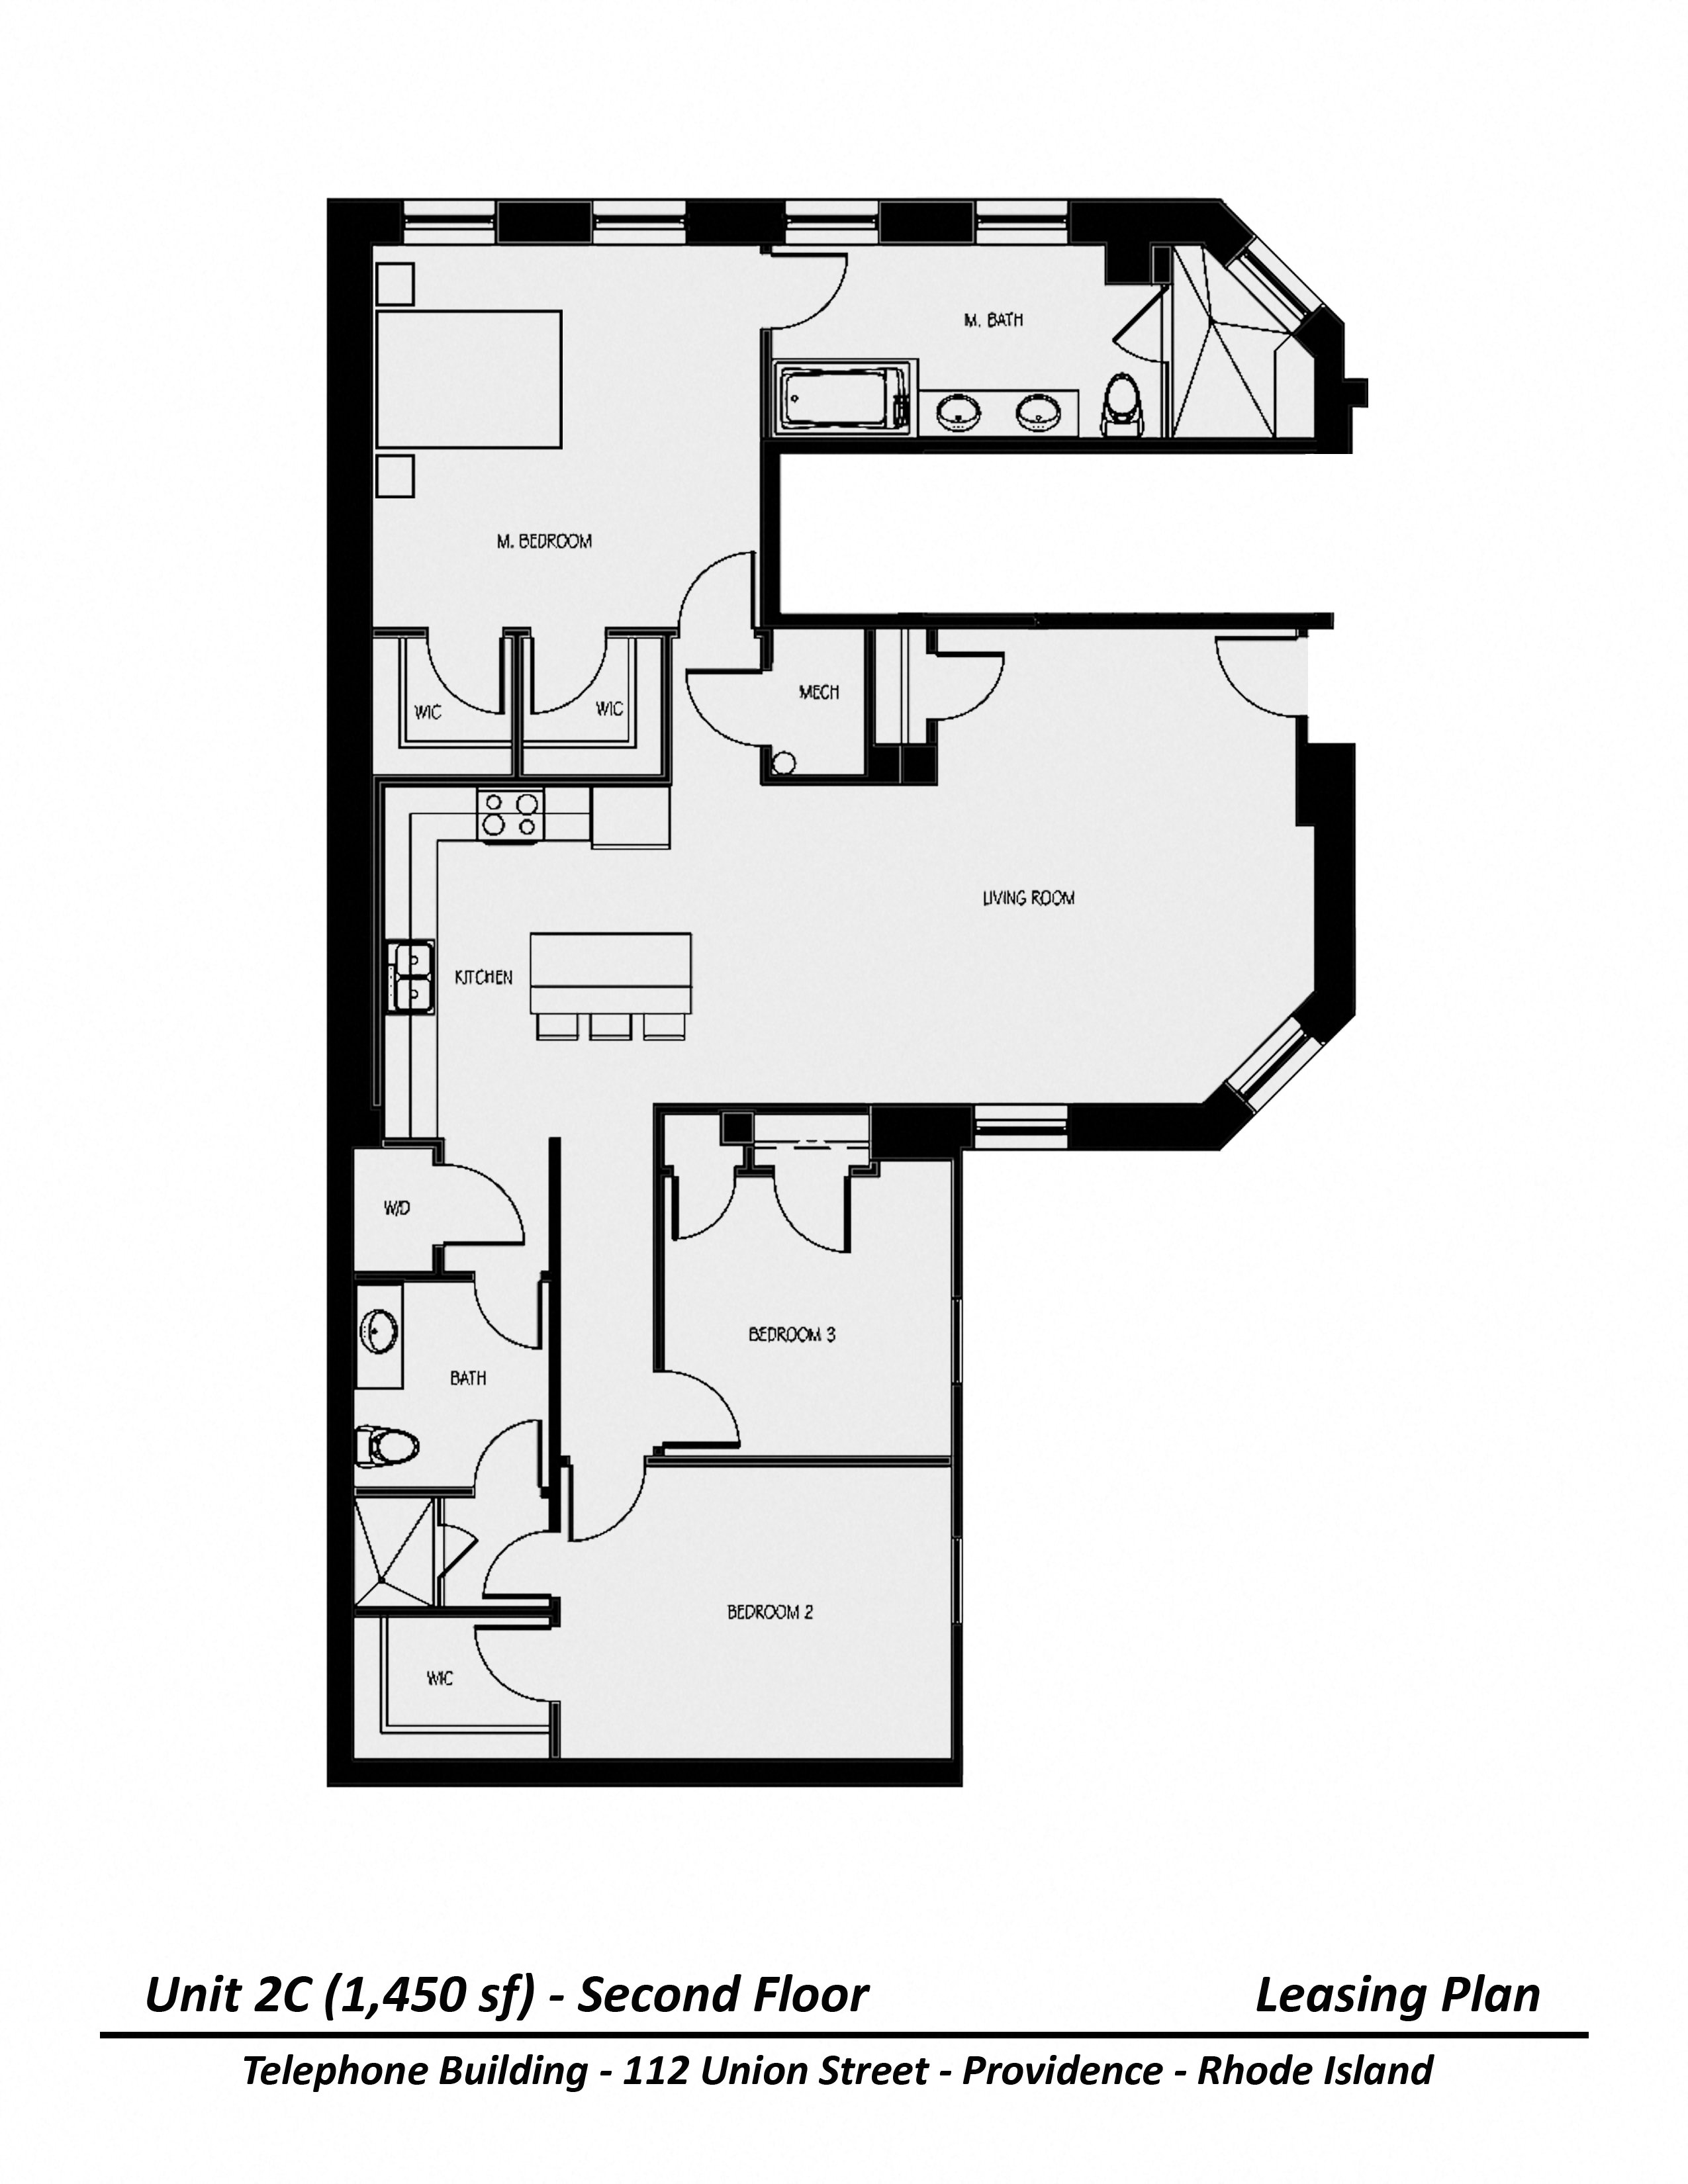 Click to view Three Bedroom floor plan gallery